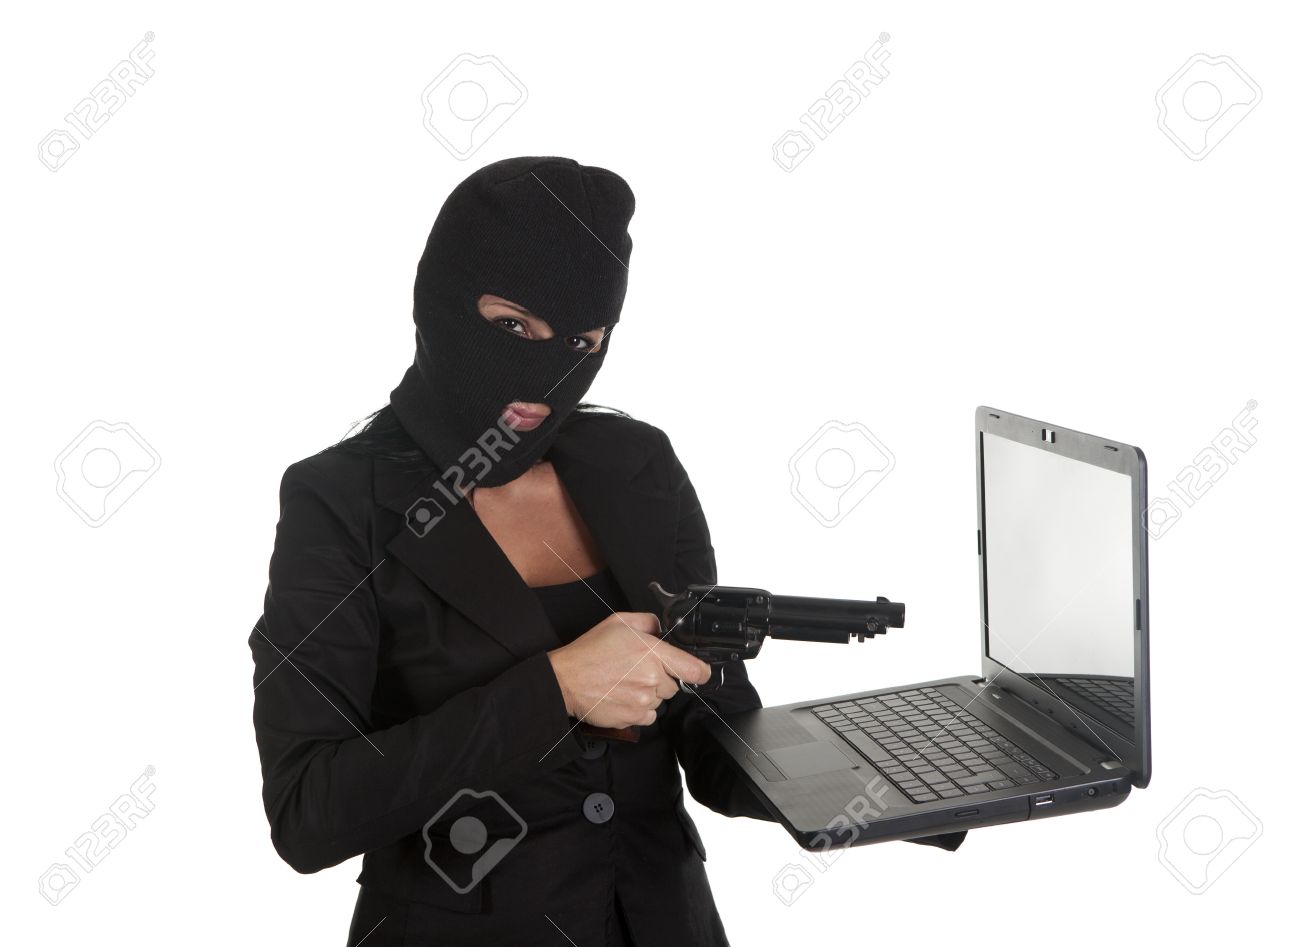 stock photos are fucking insanity 16407713-a-hacker-committing-a-crime-through-laptop-Stock-Photo-hacker-woman-balaclava